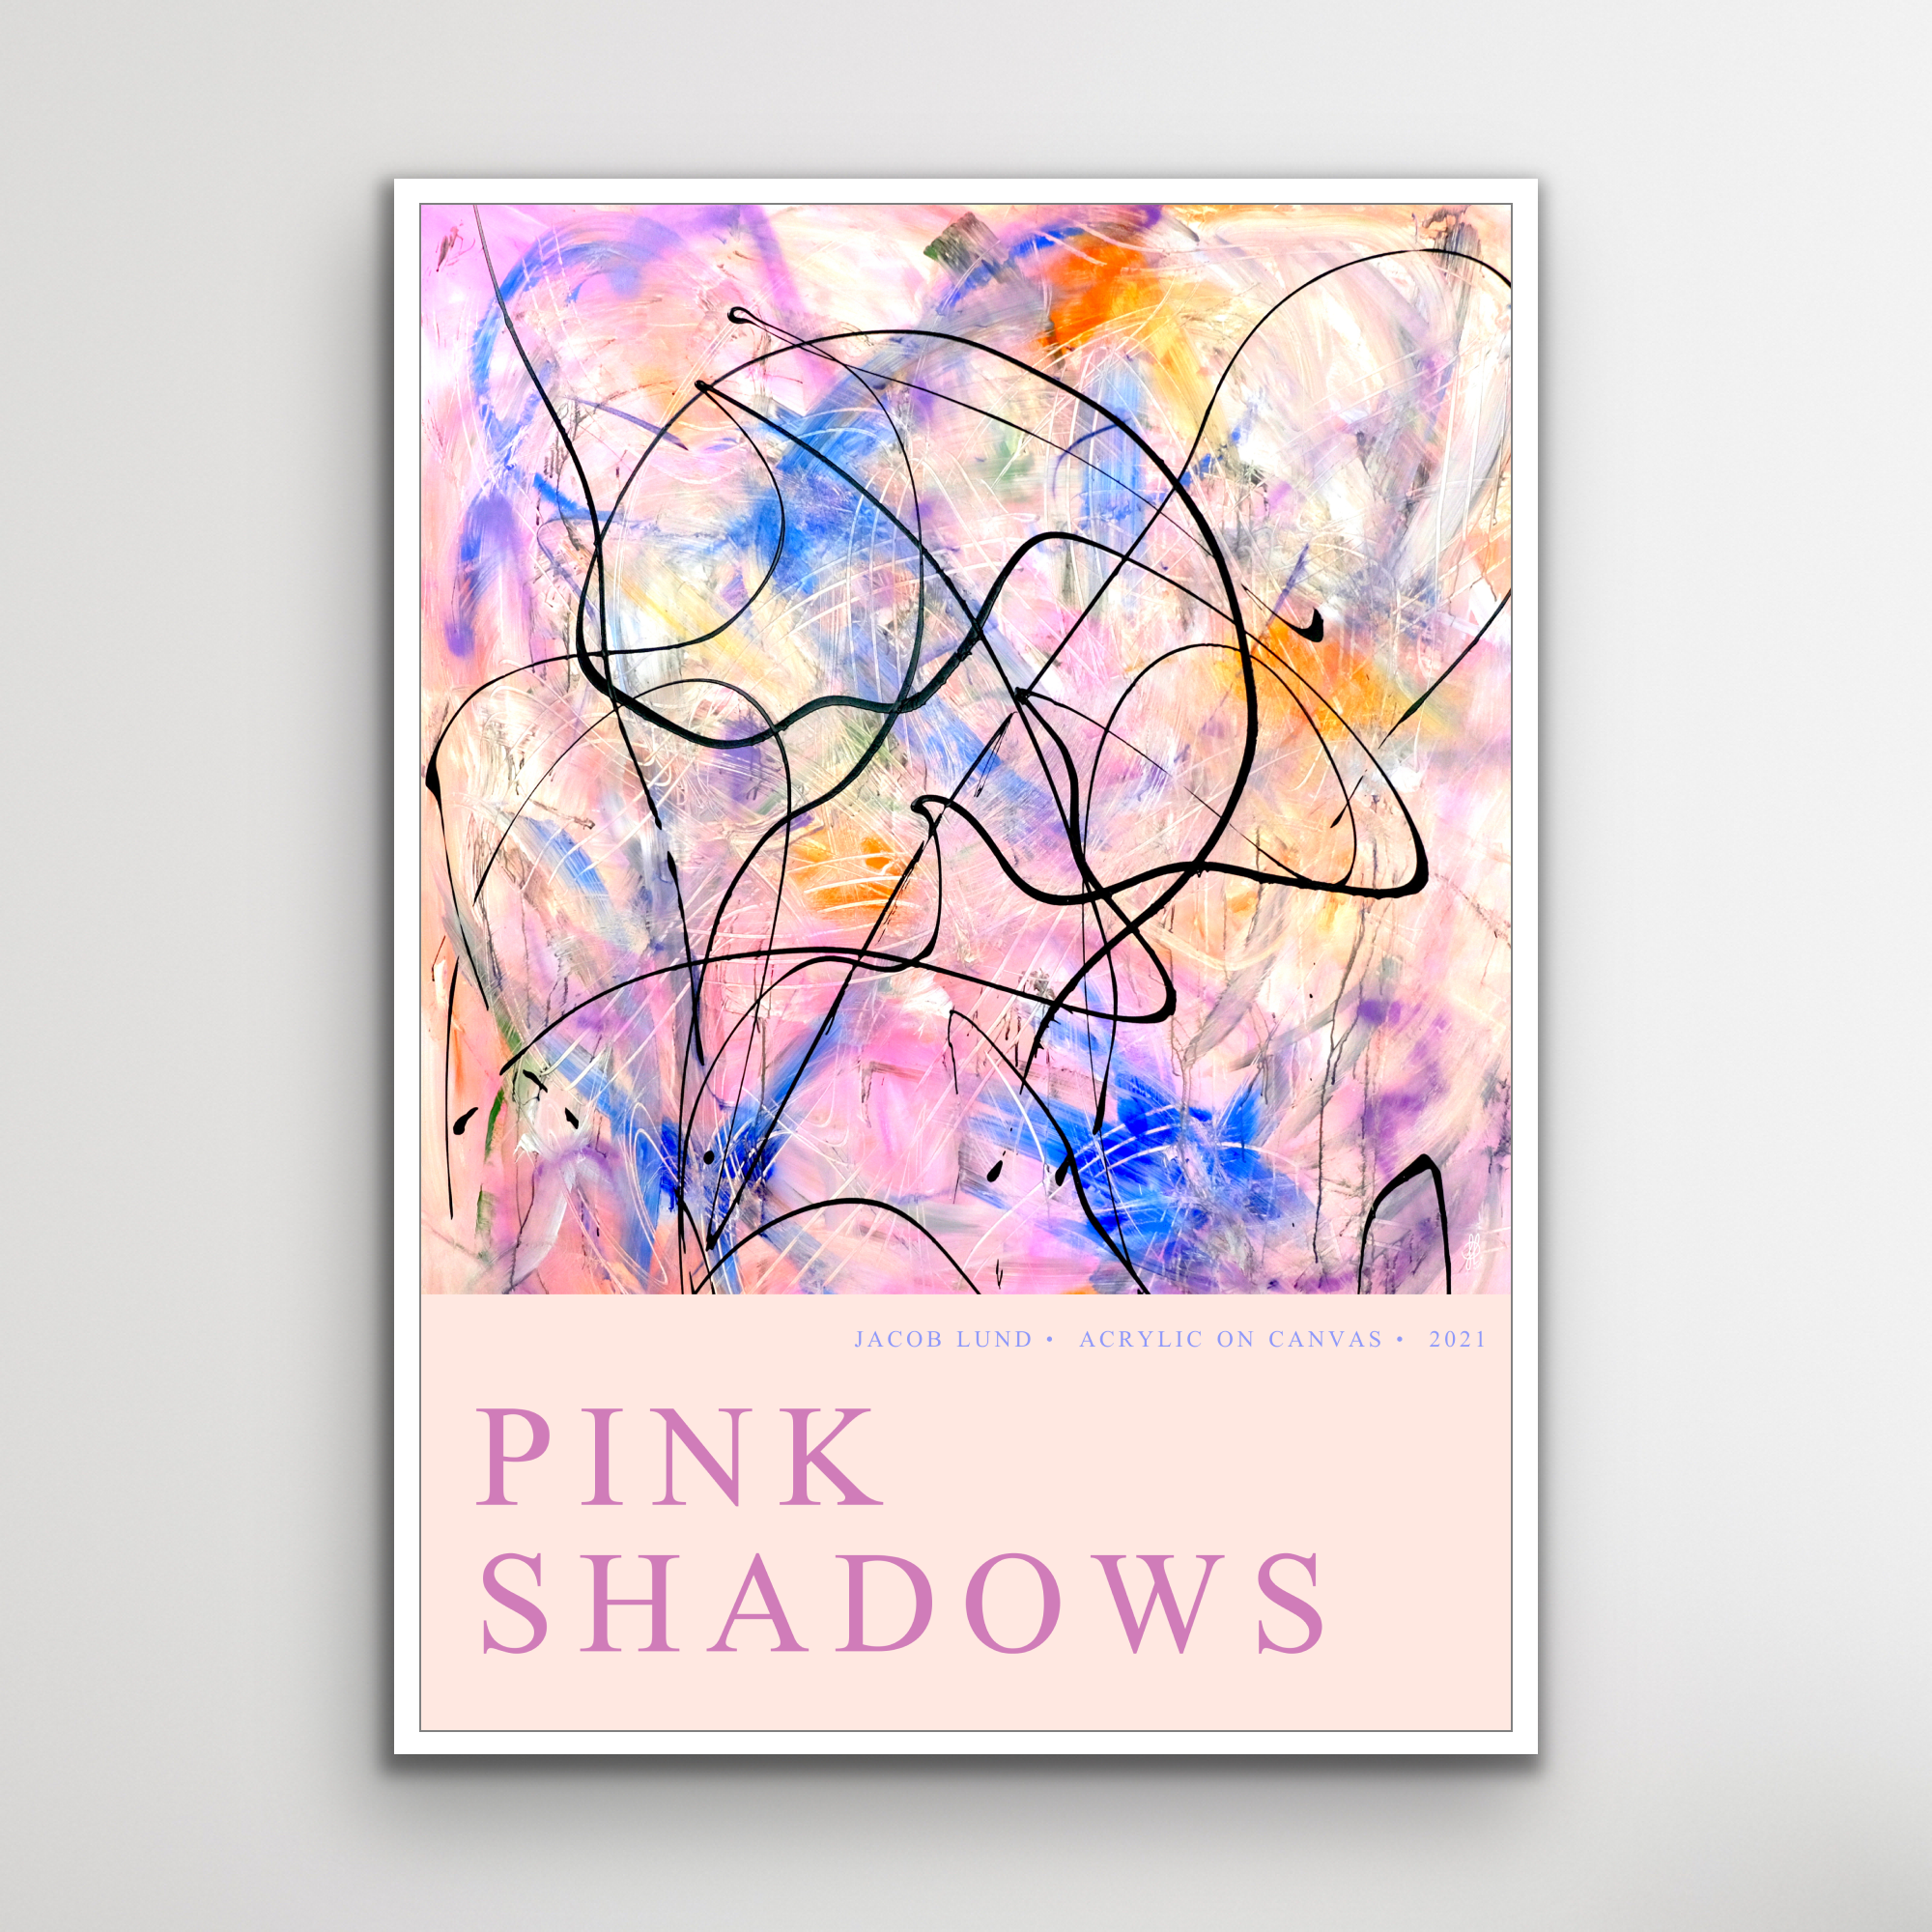 Plakat: "Pink Shadows"